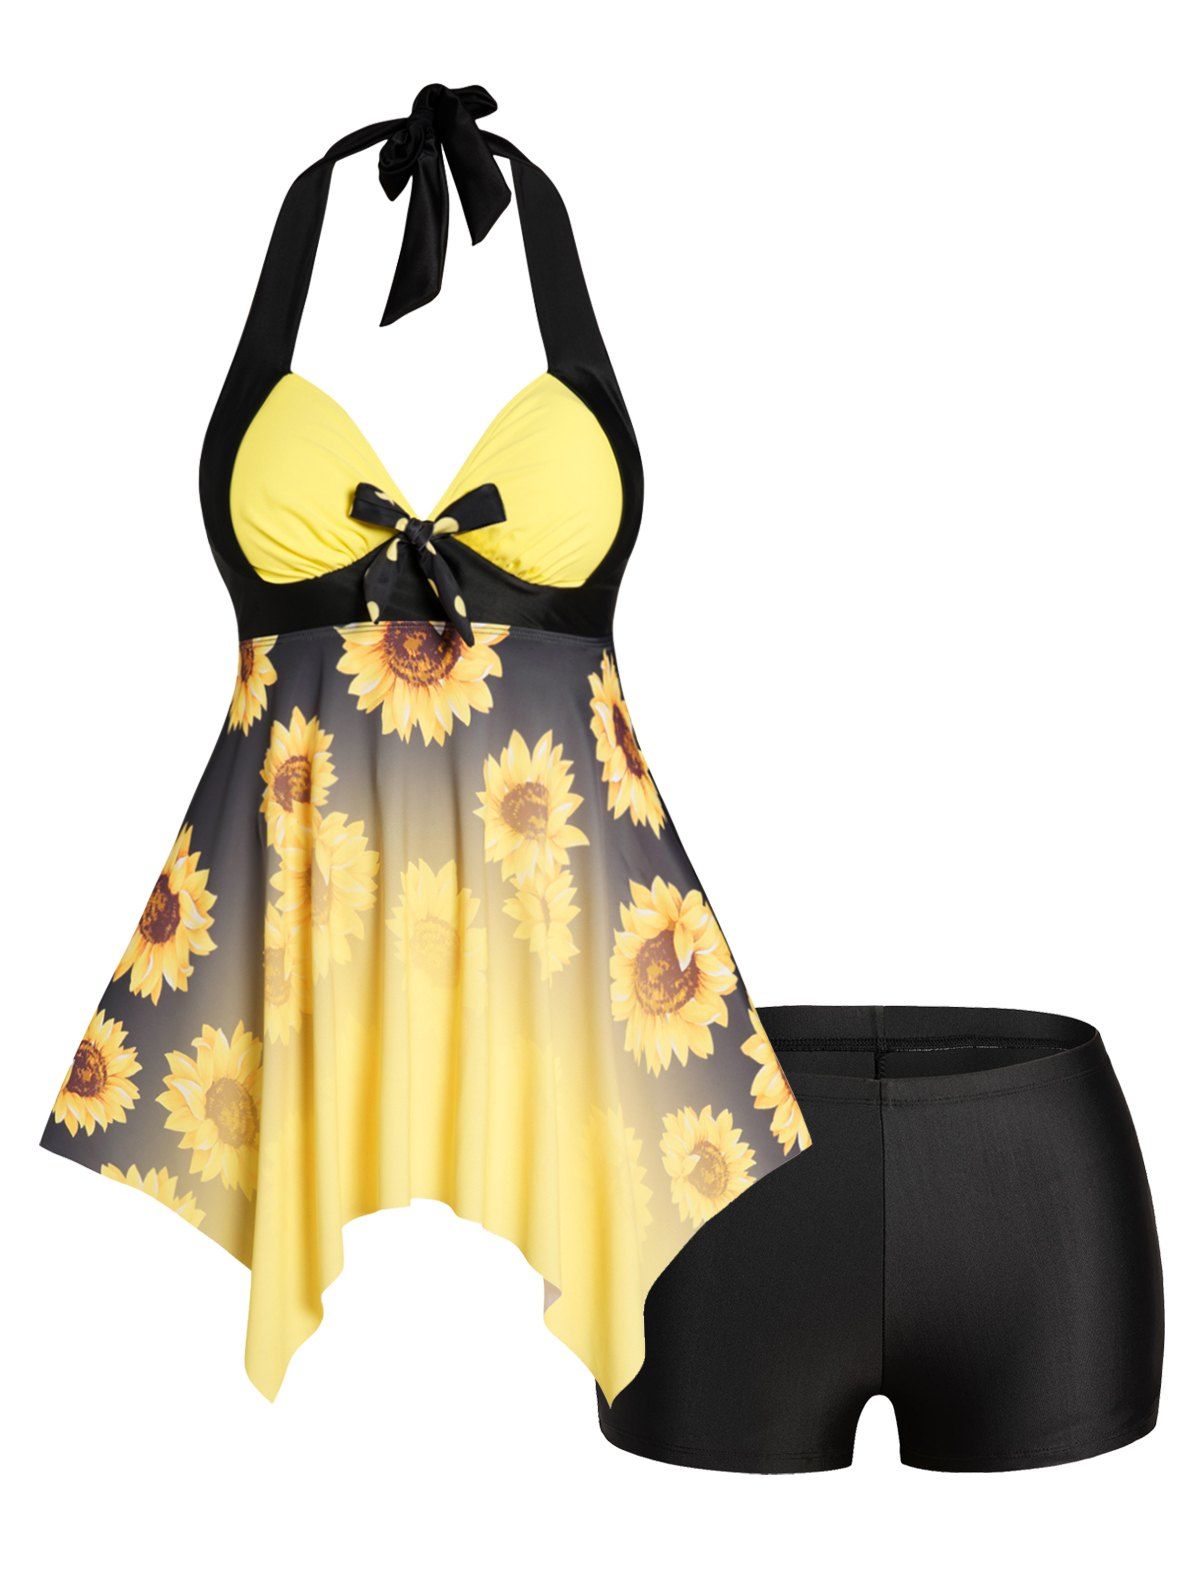 Plus Size Tankini Swimsuit Sunflower Print Halter Vacation Modest Swimsuit Padded Boyleg Bathing Suit - YELLOW 2X